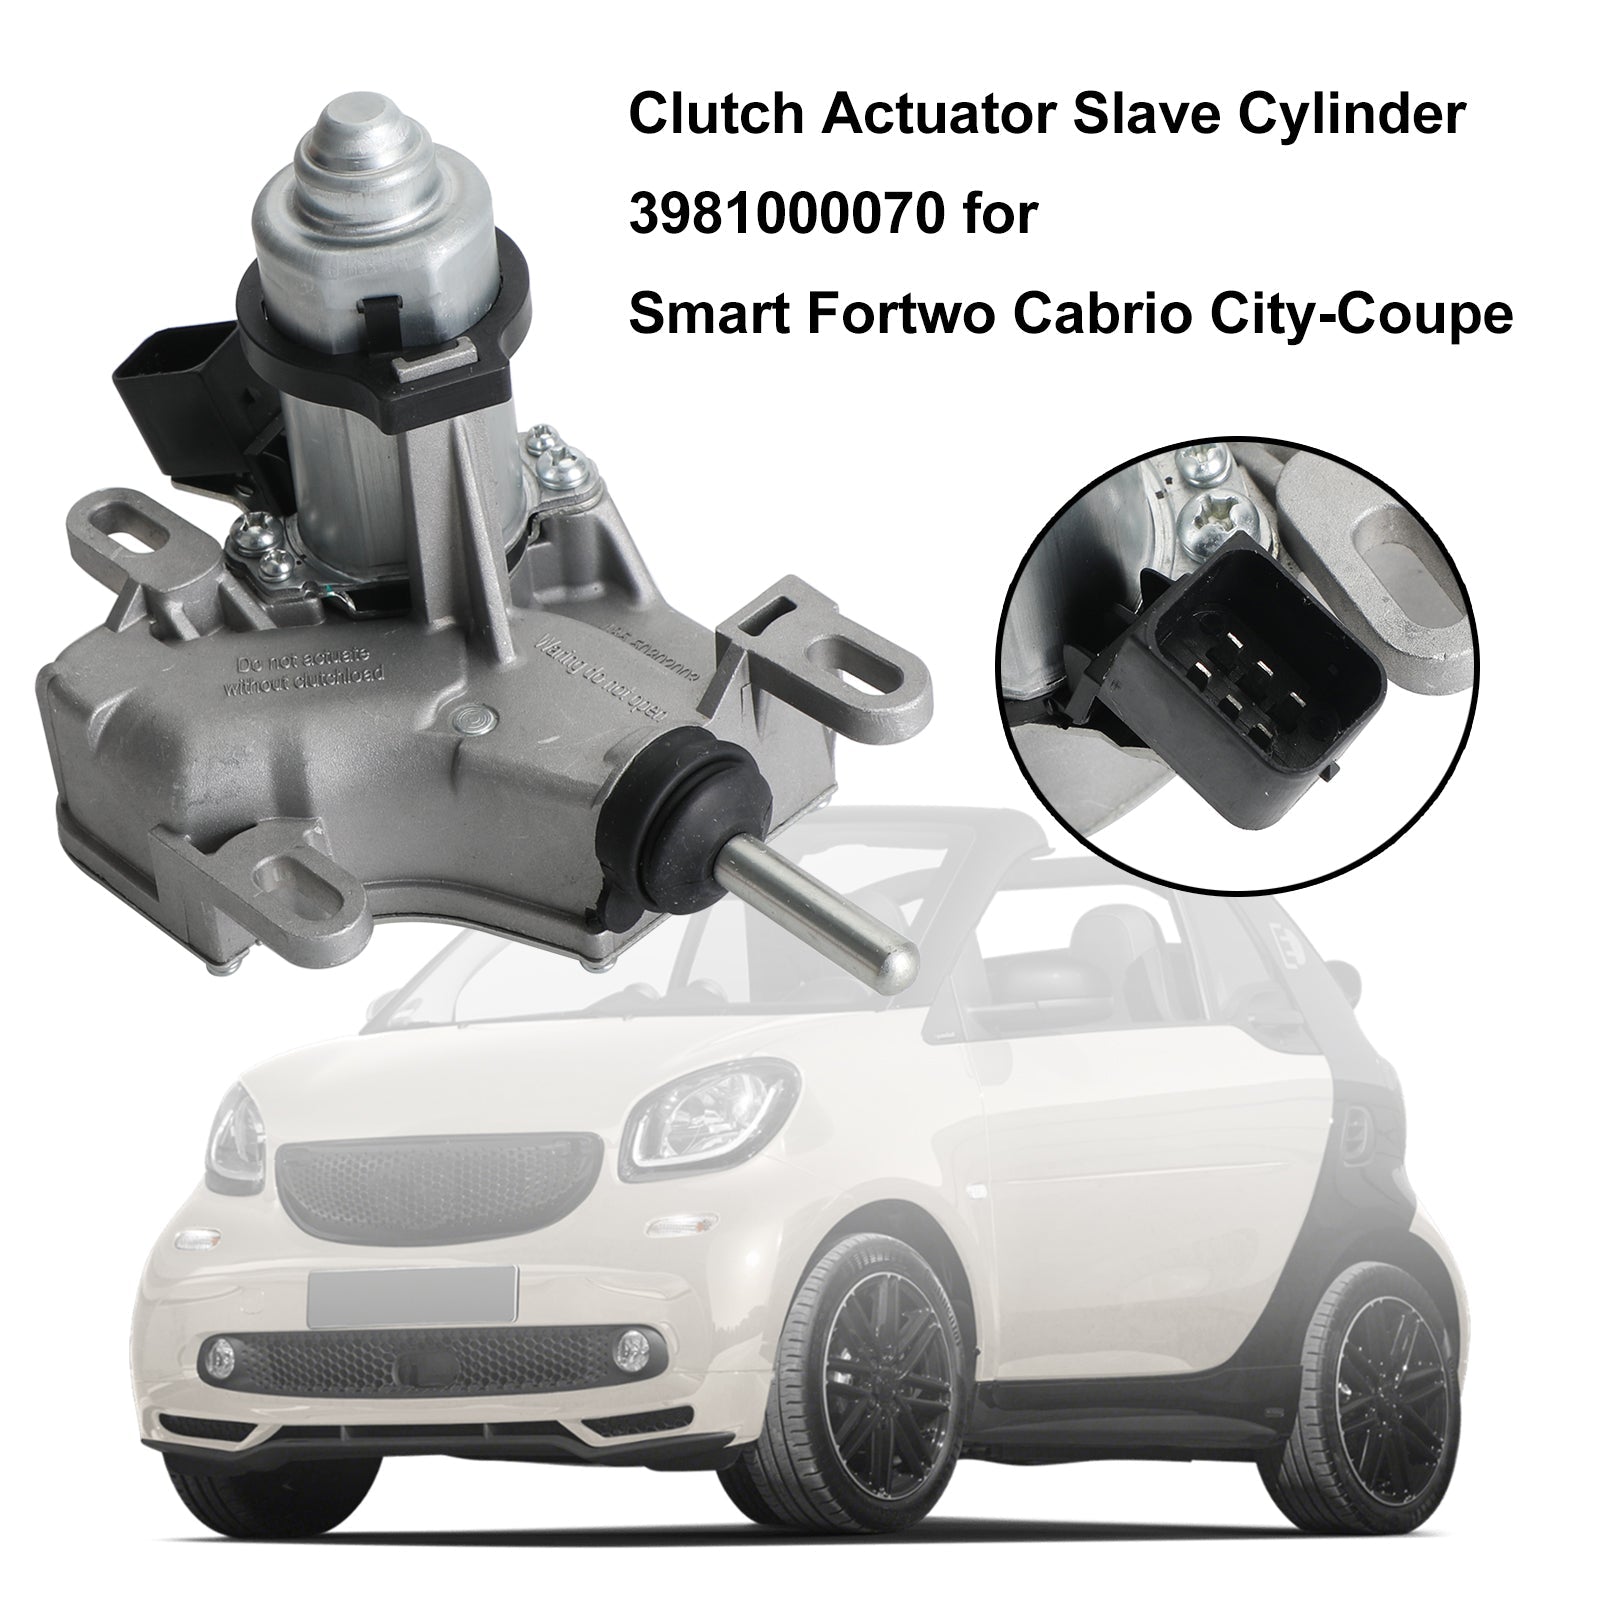 Cilindro esclavo del actuador Crayat Smart Fortwo Cabrio City-Coupe 3981000070